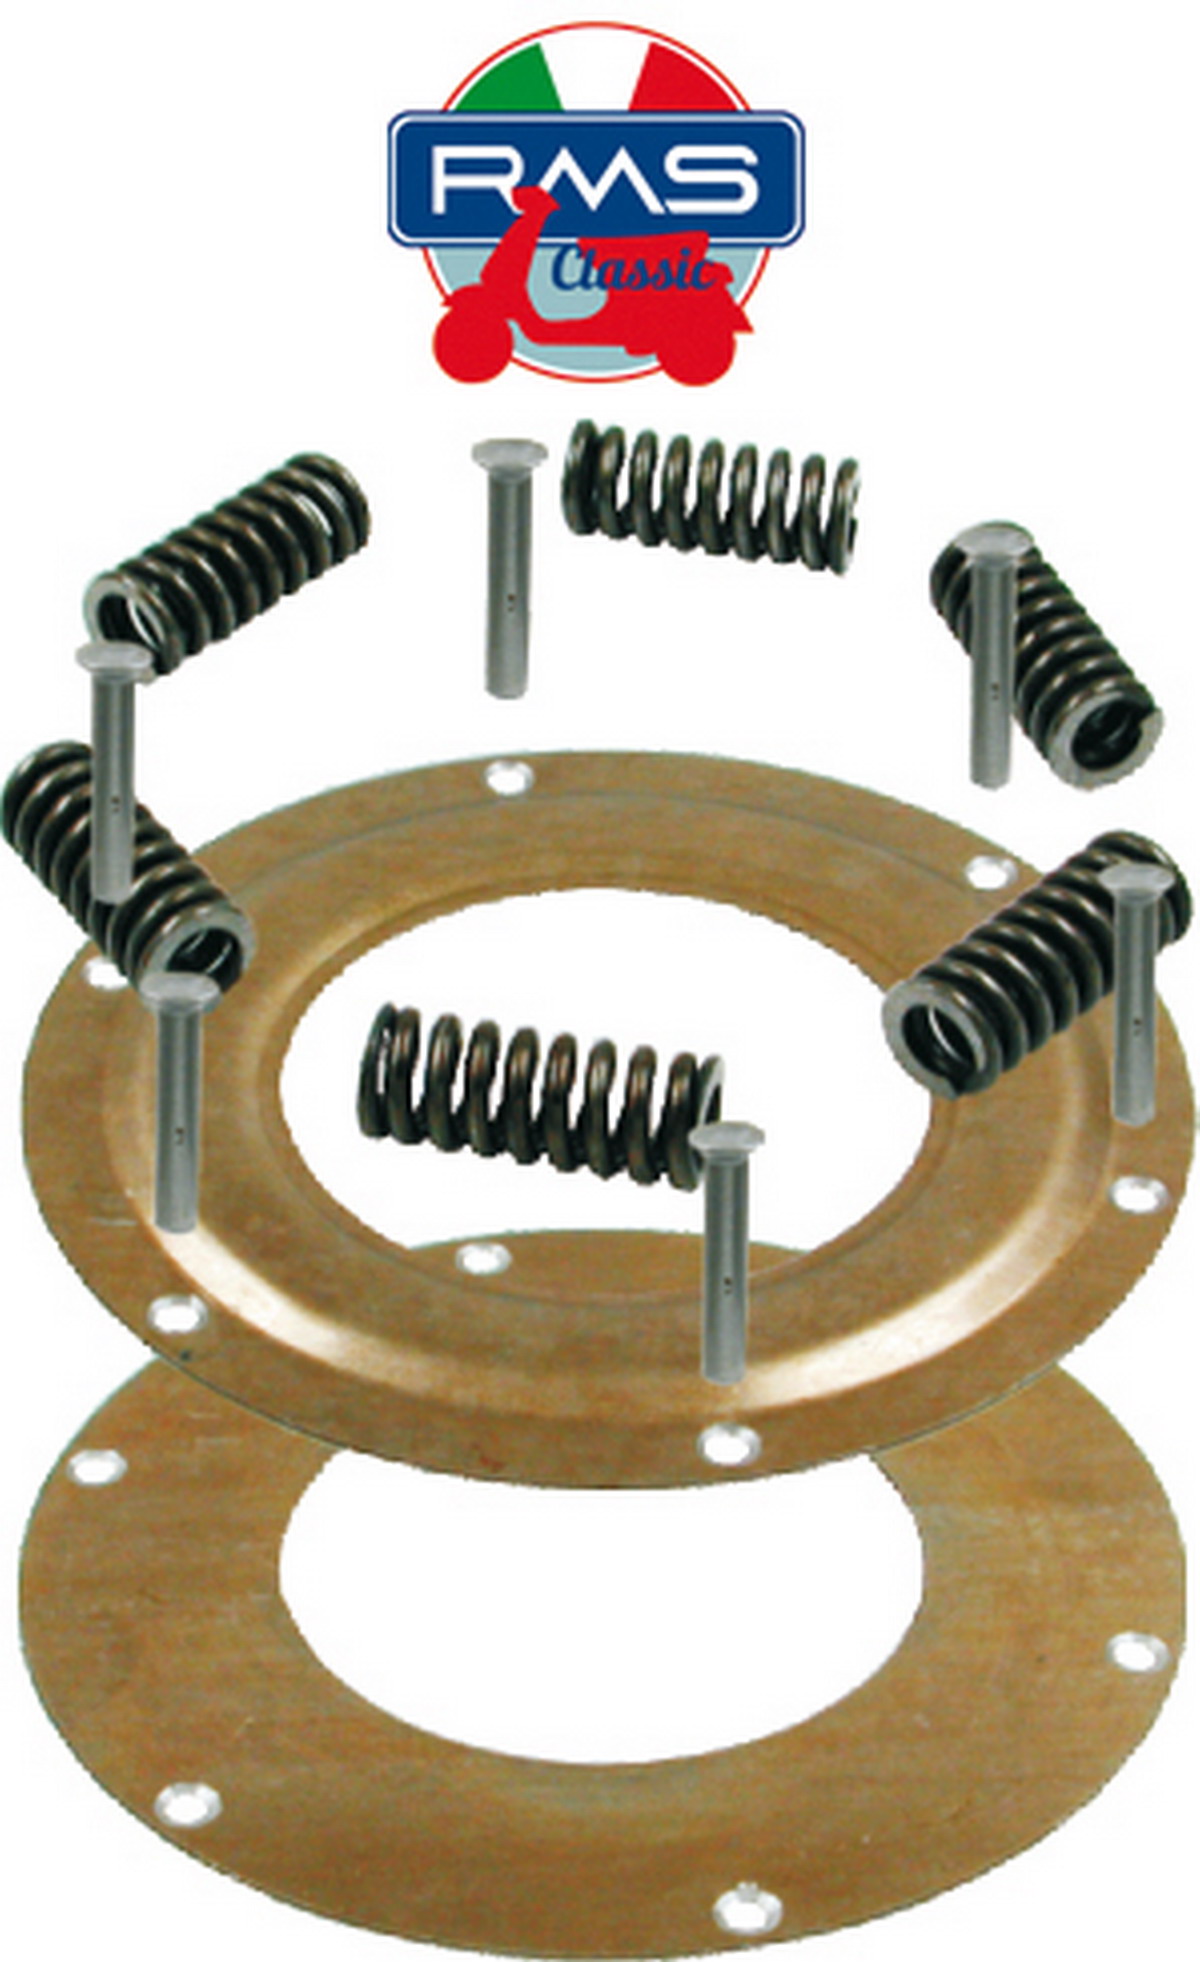 Obrázek produktu Primary drive shock absorber spring kit RMS 100300050